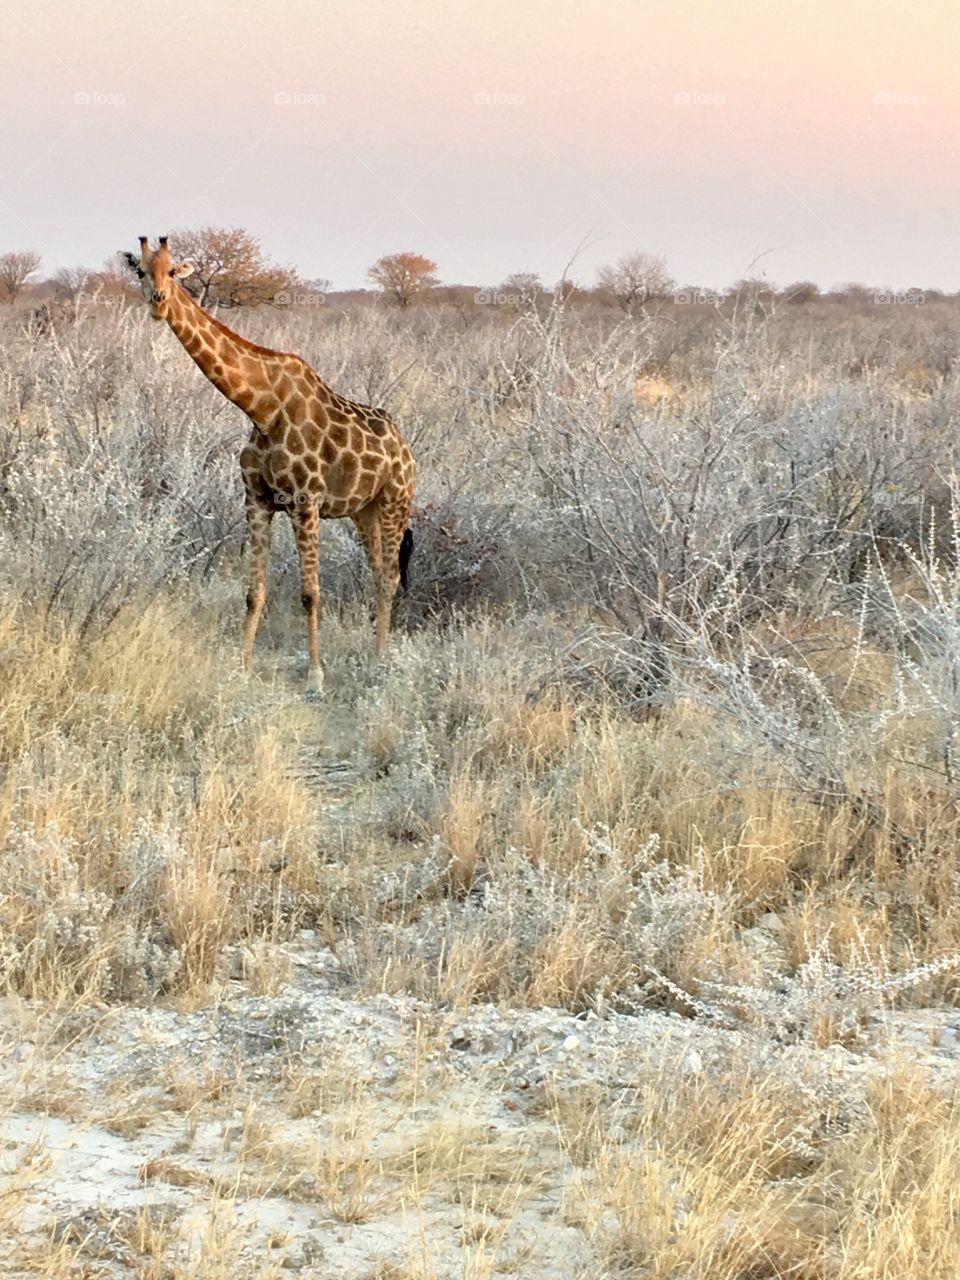 A Giraffe in Etosha National Park